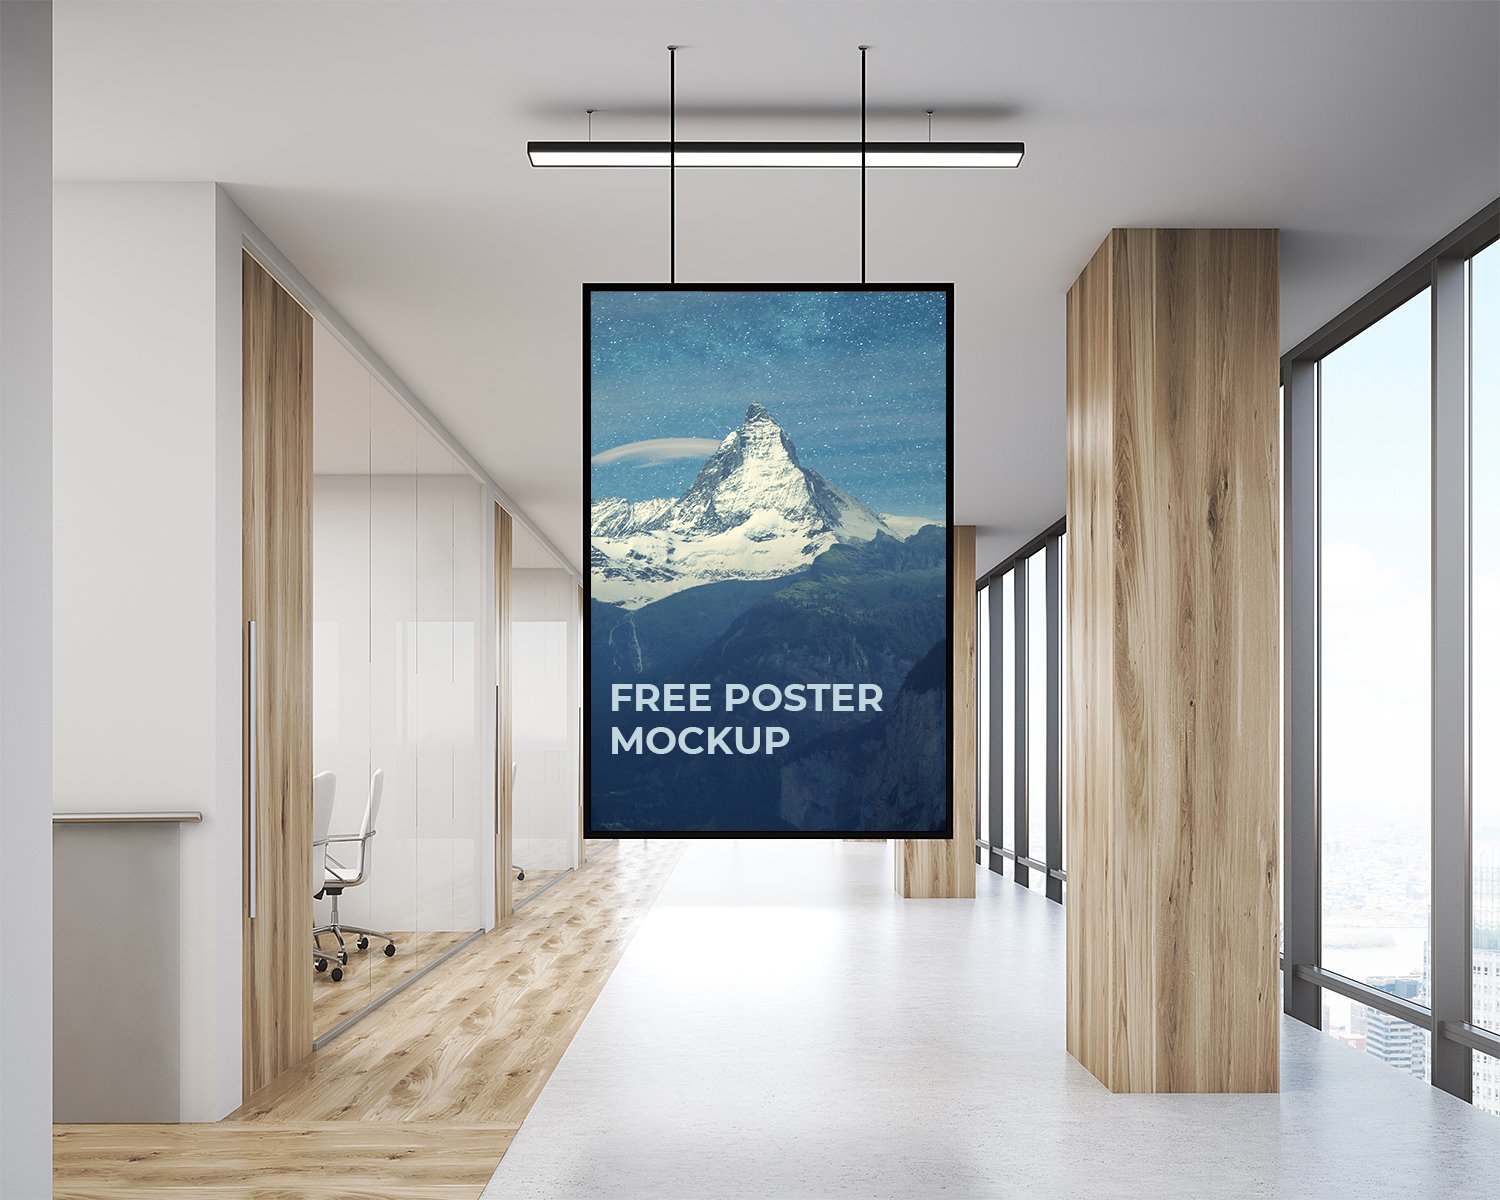 Office Indoor Hanging Poster Mockup - Free Mockup